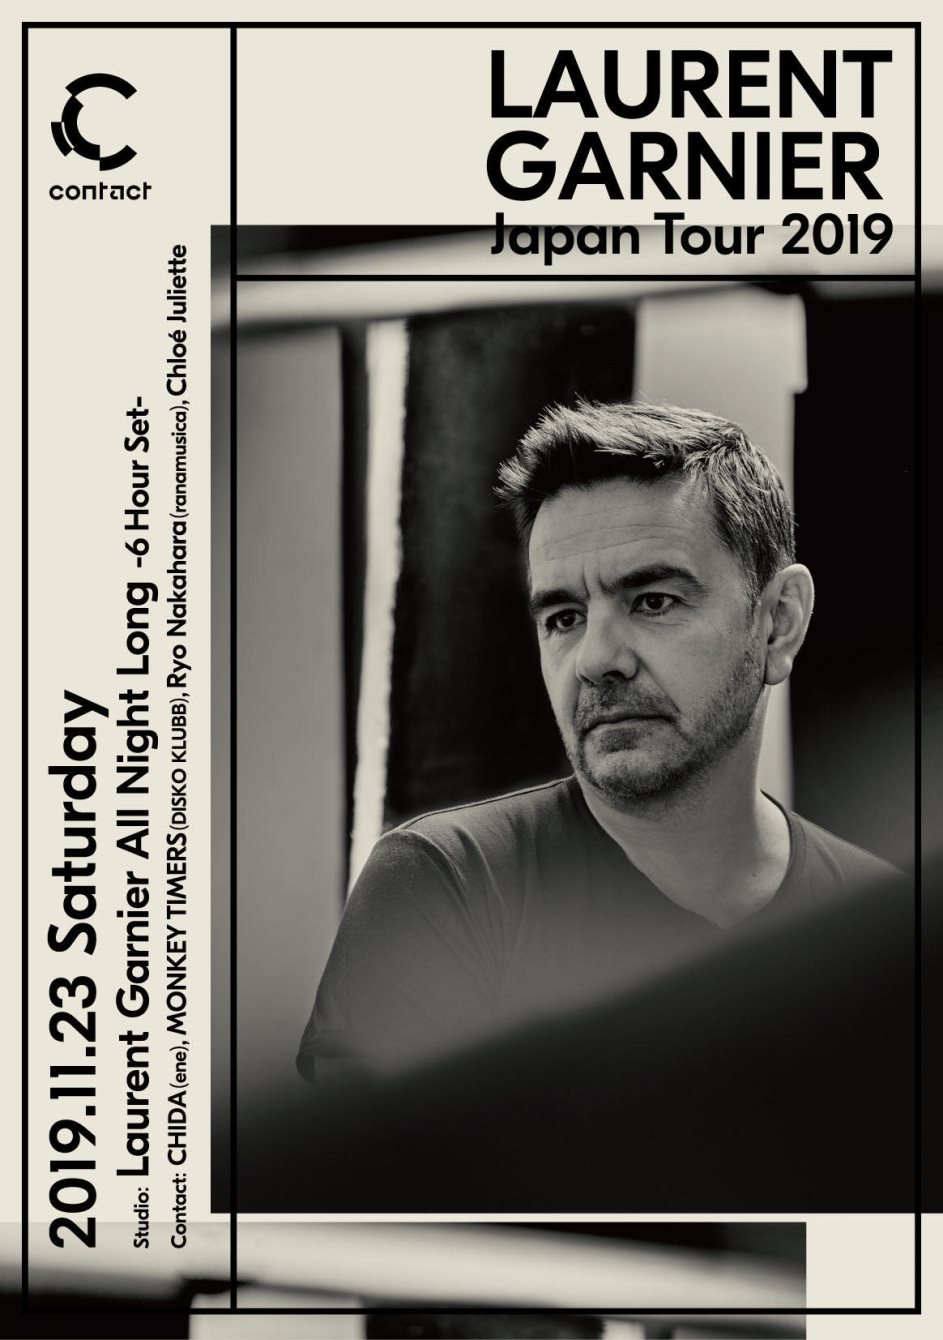 Laurent Garnier Japan Tour 2019 - Flyer front